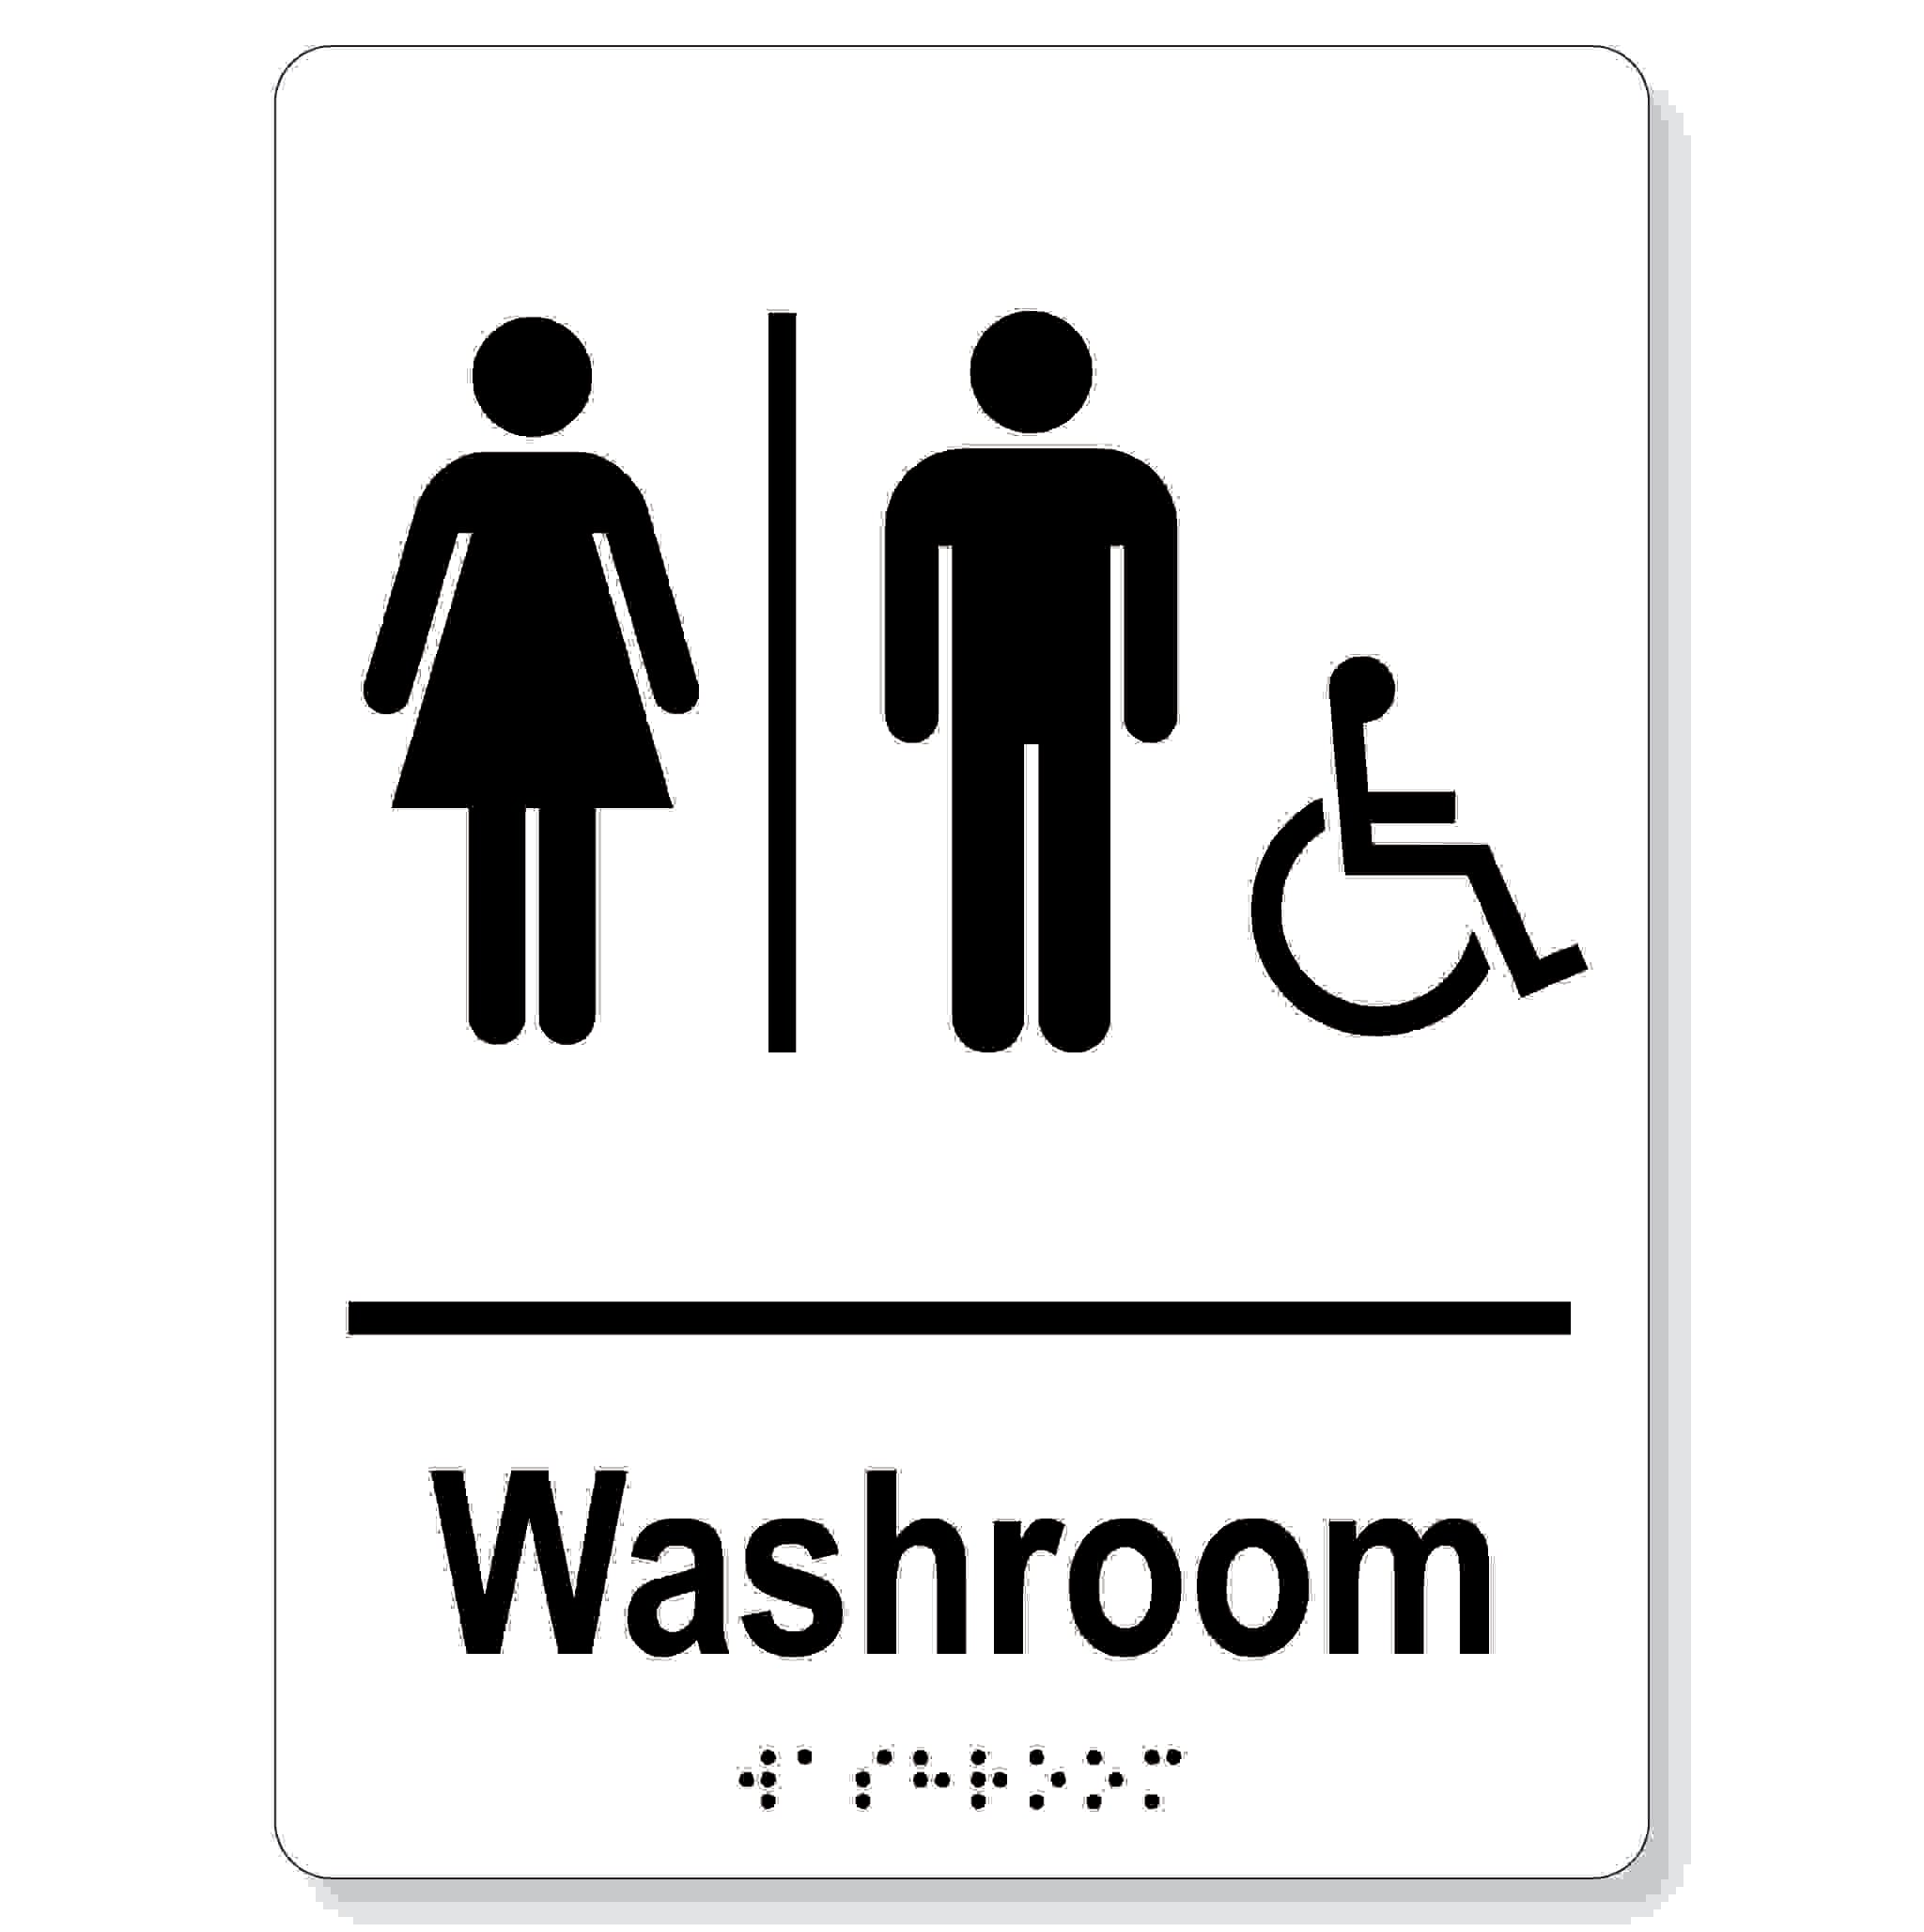 Washroom accessible sign